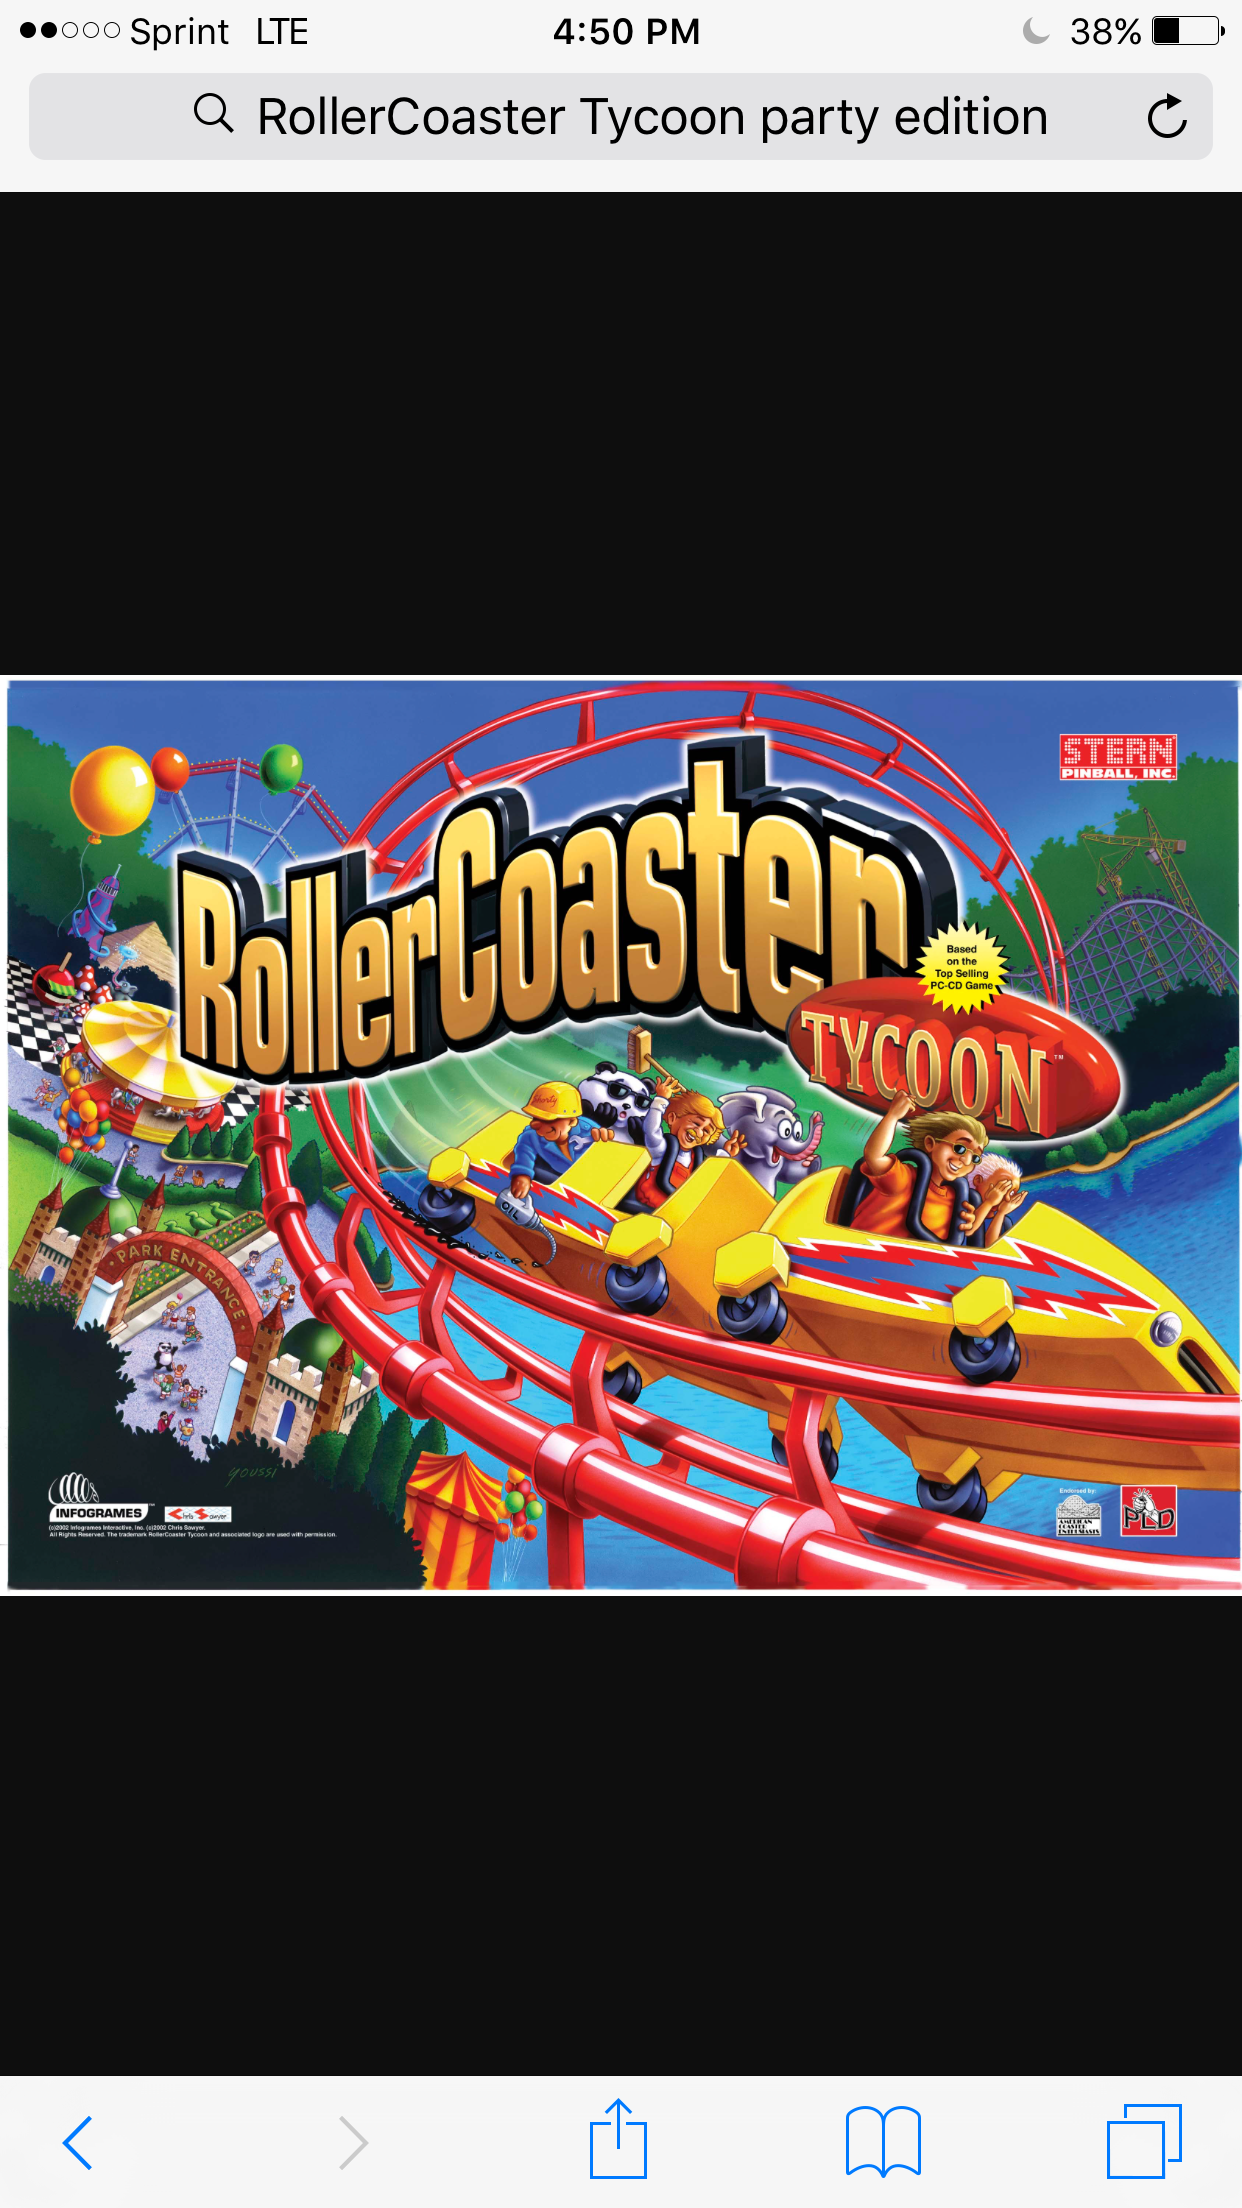 RollerCoaster Tycoon (film) | Rio fanon Wiki | FANDOM powered by Wikia